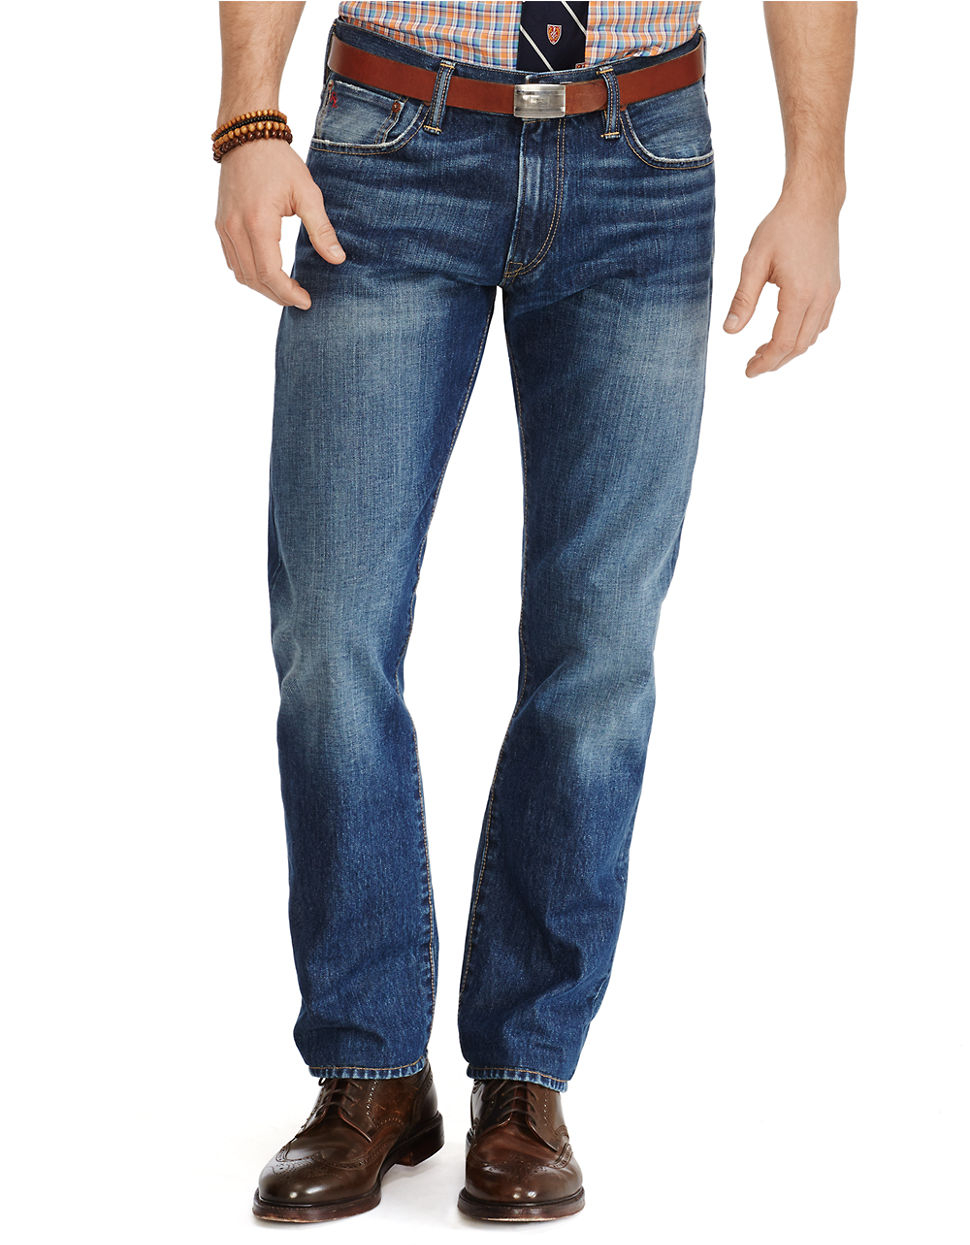 Polo Ralph Lauren Hampton Straight-Fit Jeans in Blue for Men - Lyst